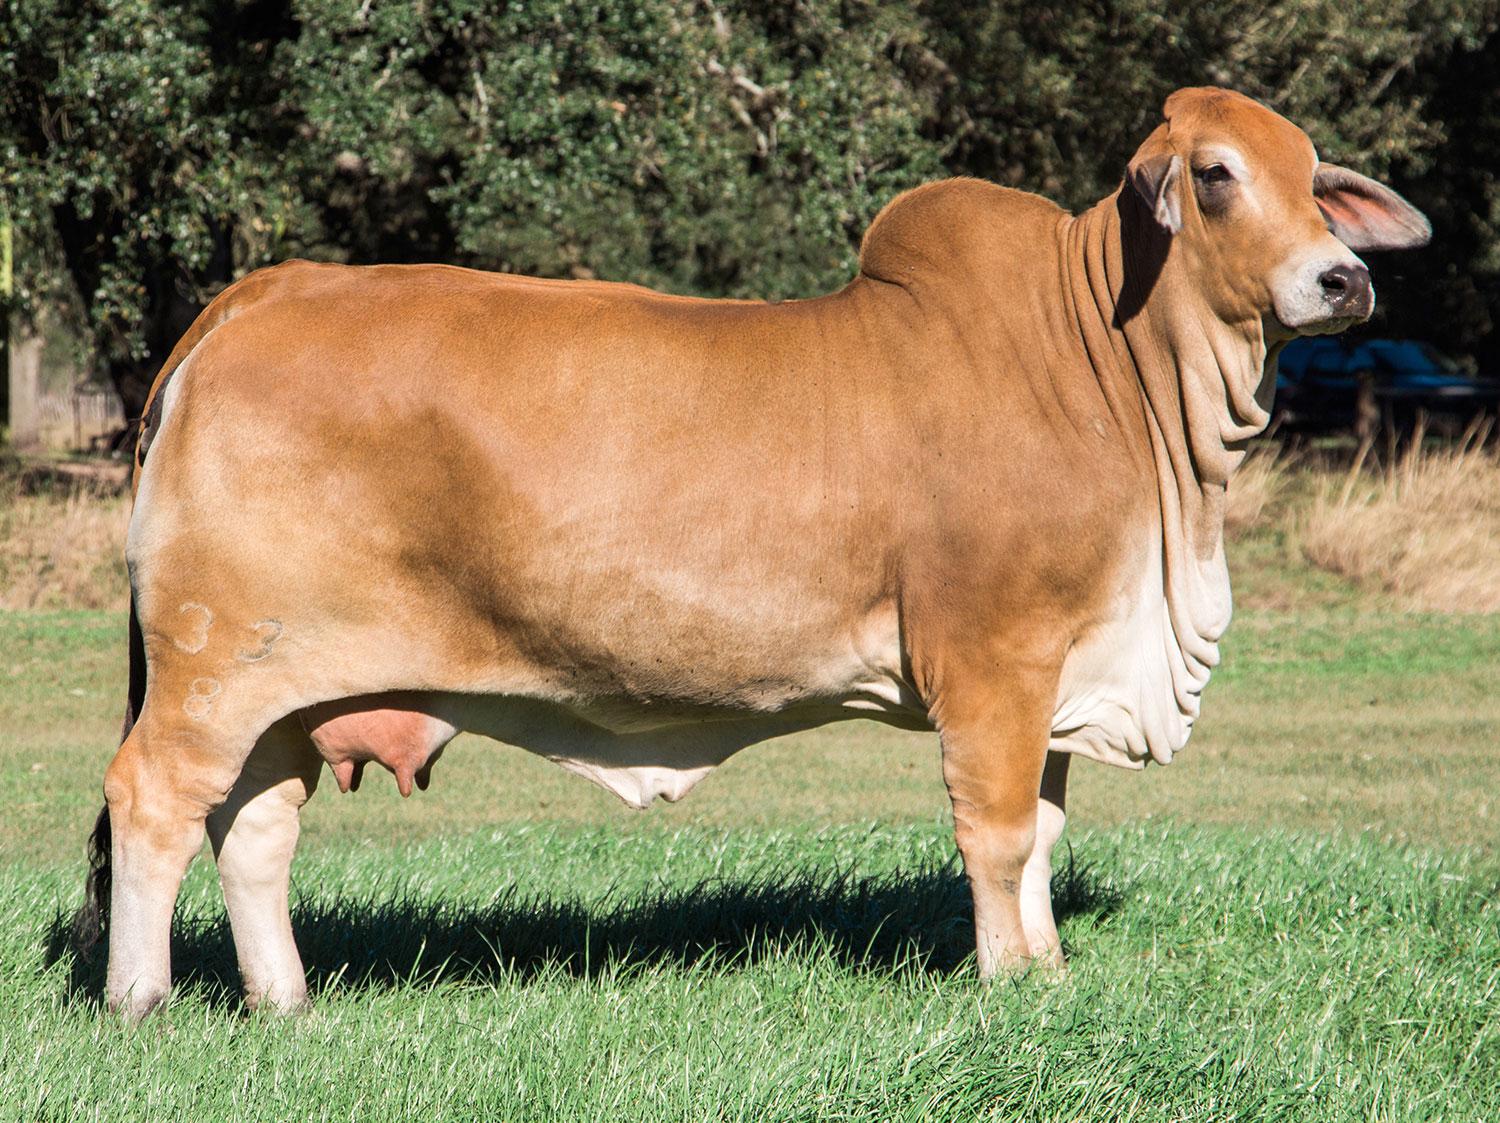 Miss V8 33/8 Donor Cow at V8 Ranch